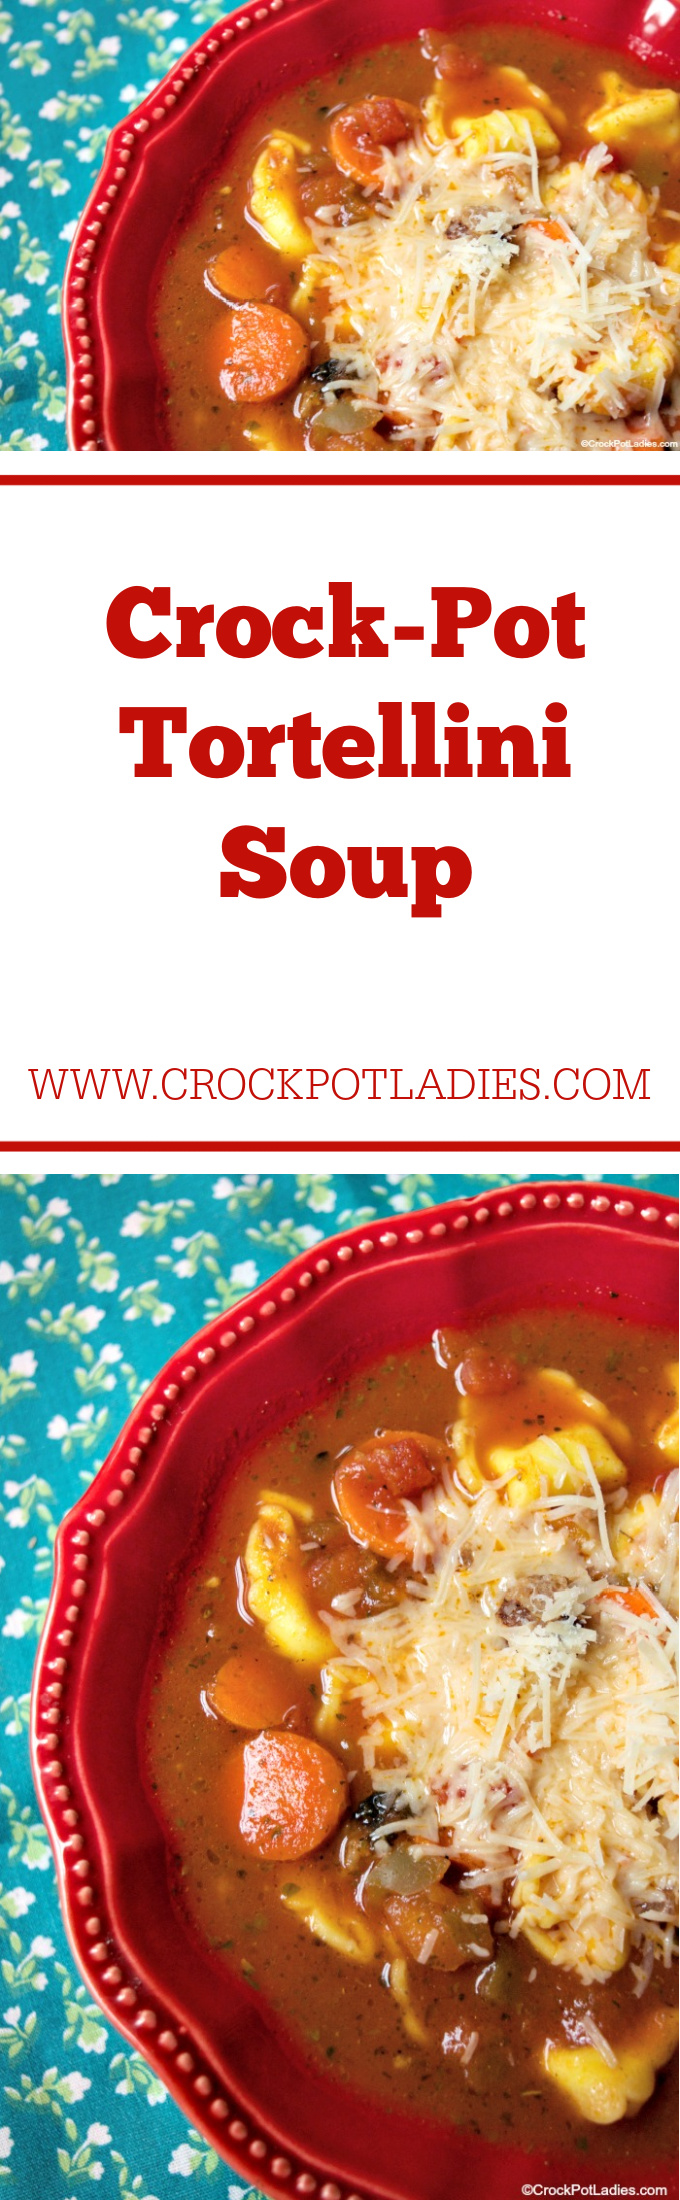 Crock-Pot Tortellini Soup